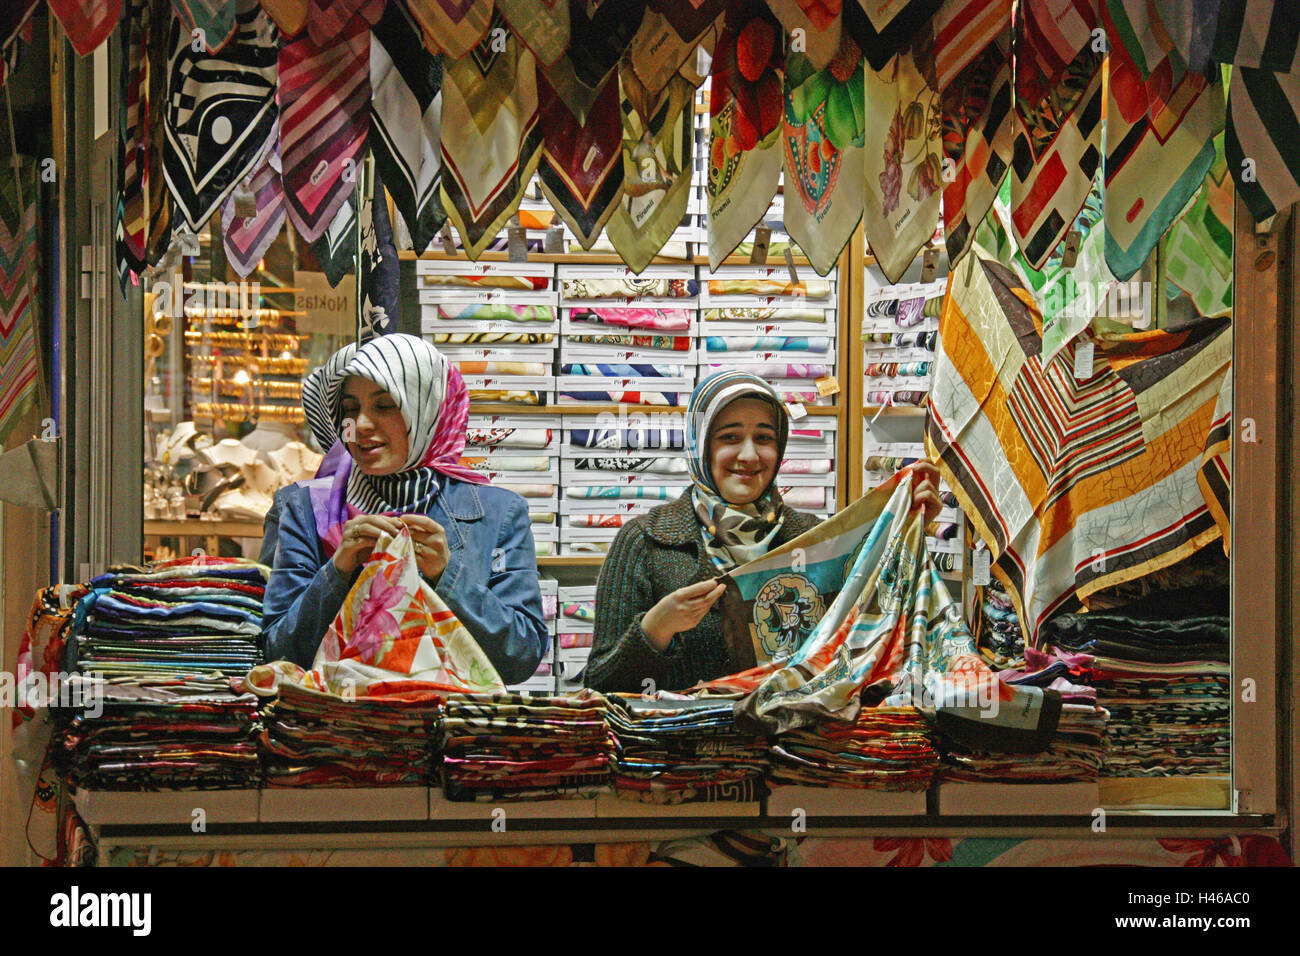 Women, two, cloths, sell, people, shop assistants, substance cloths, brightly, sales, Turkey, Bursa, bazaar, headscarfs, tradition, bazaar, shopping, shopping, Stock Photo